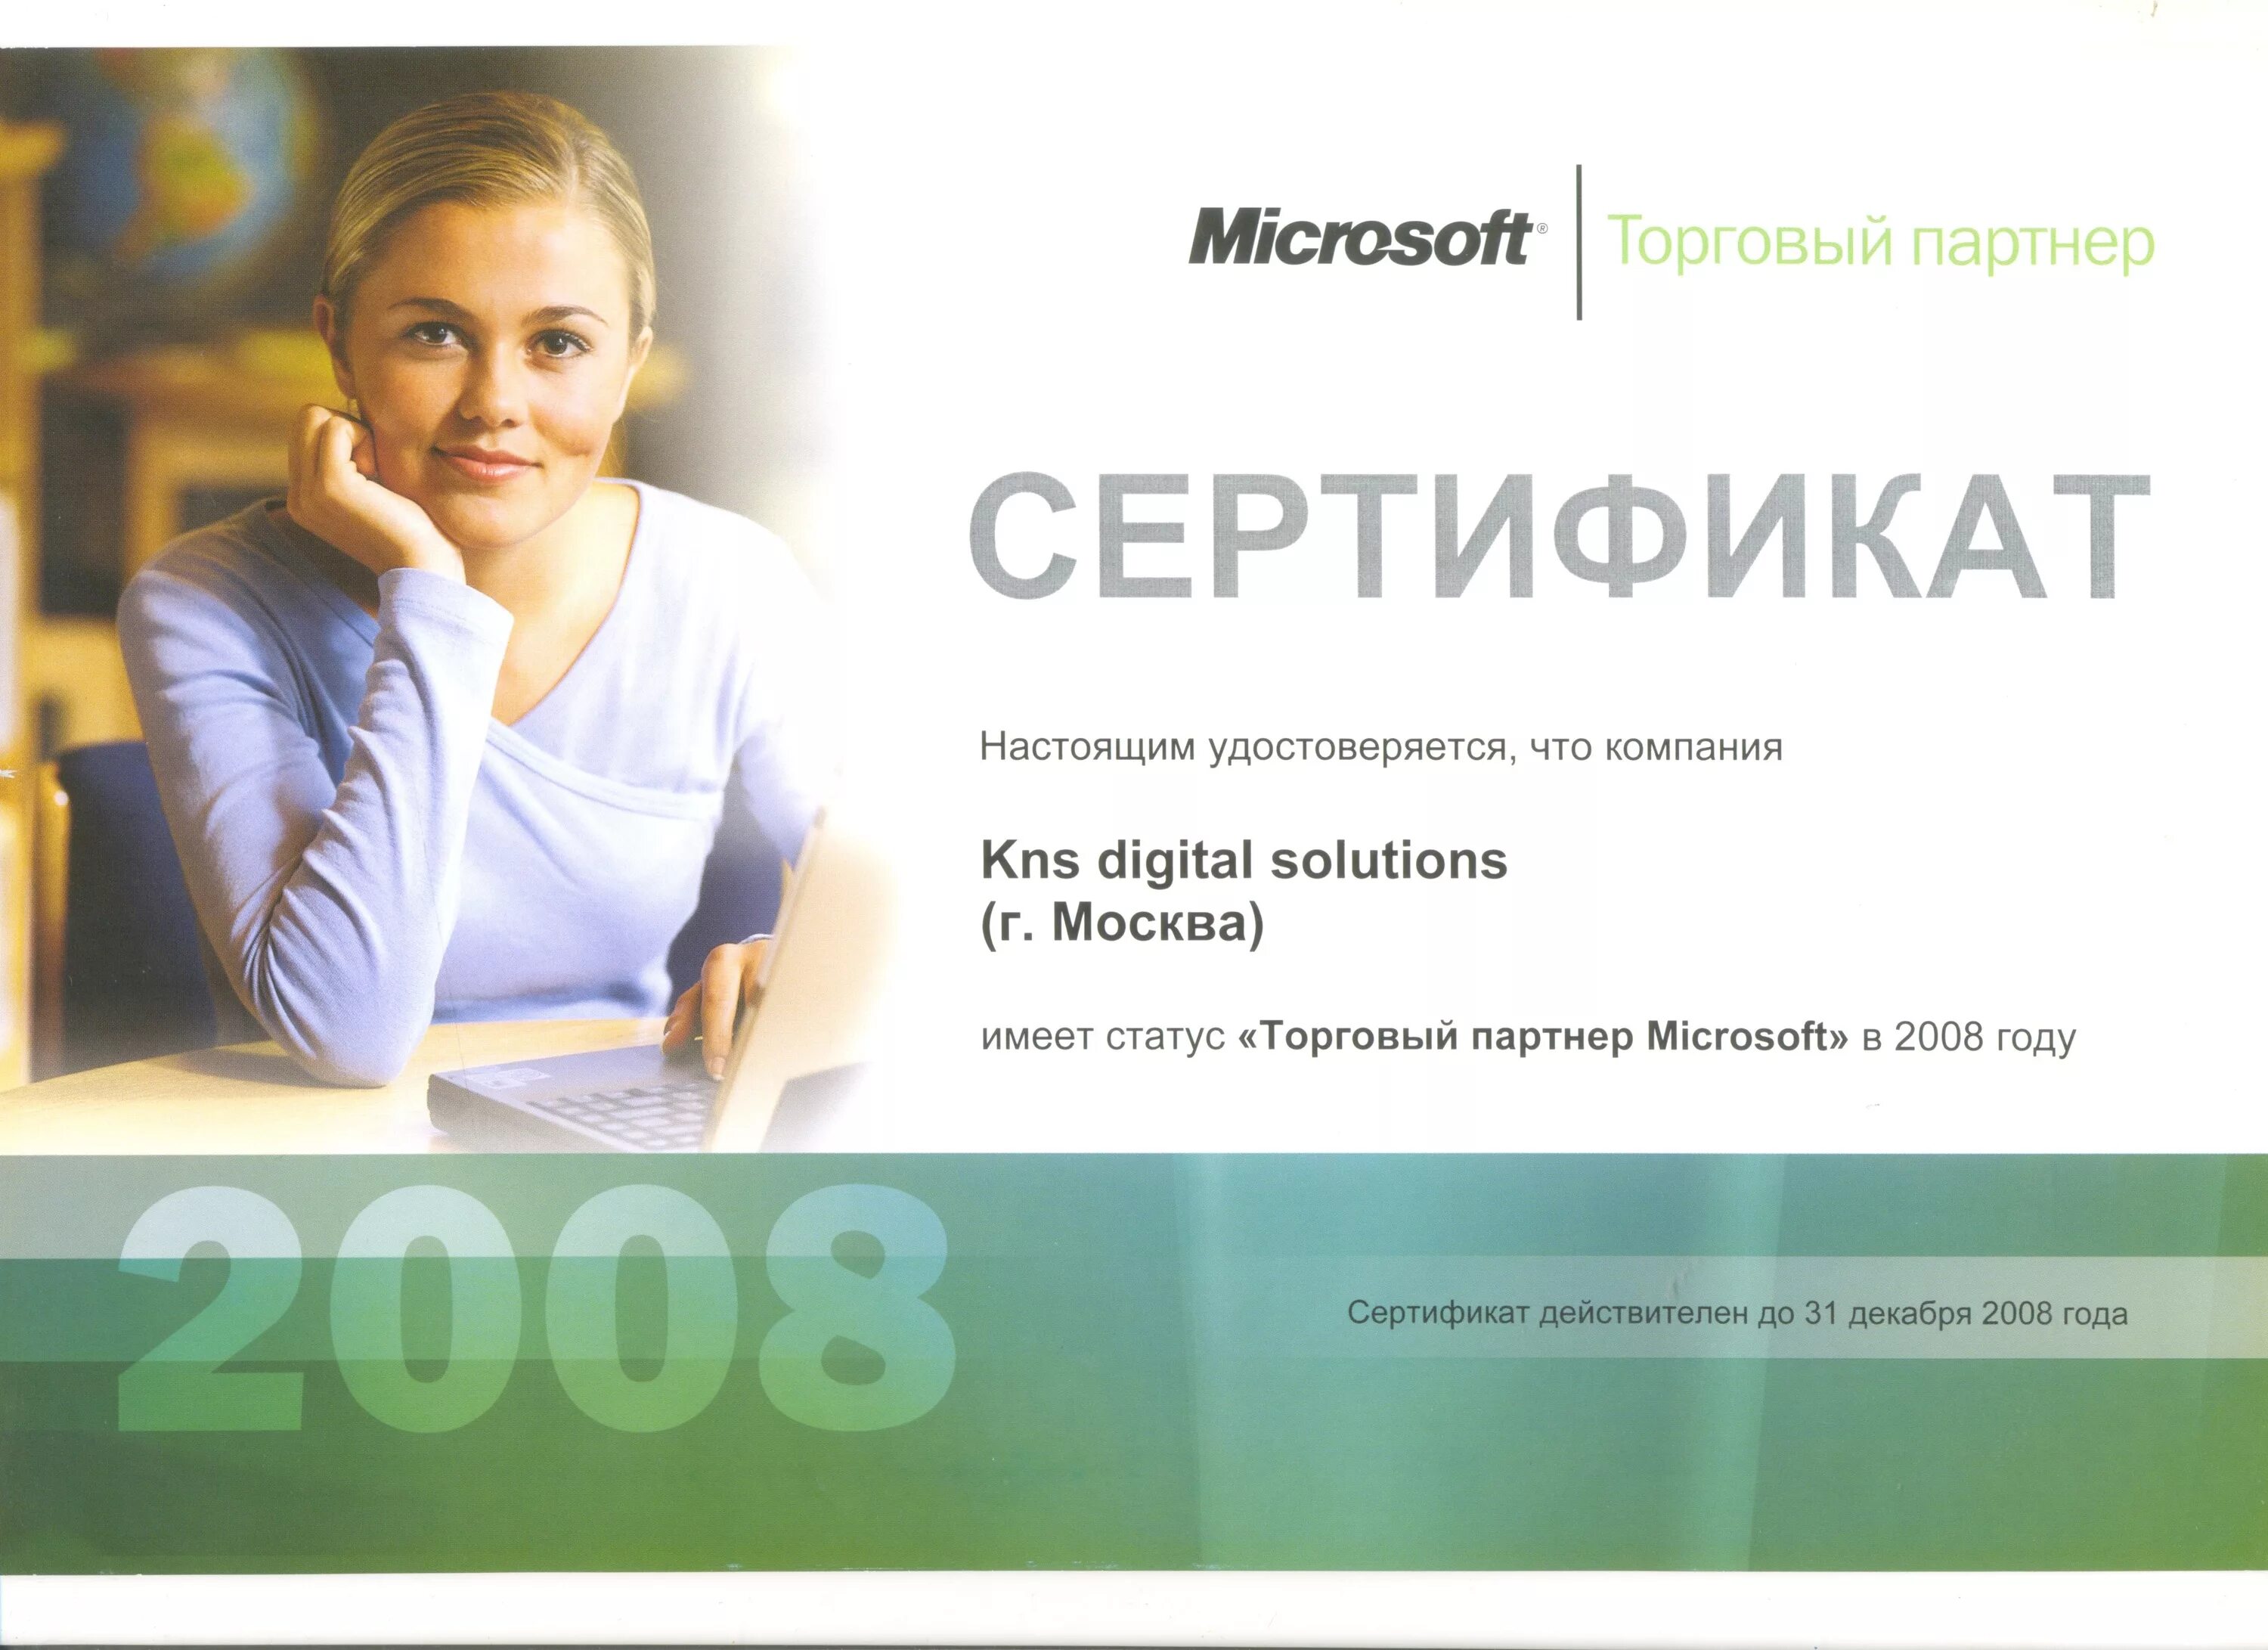 Microsoft certificate. Сертификат Microsoft. Сертификат партнера Microsoft. Сертификат торгового партнера. Партнерский сертификат Майкрософт.